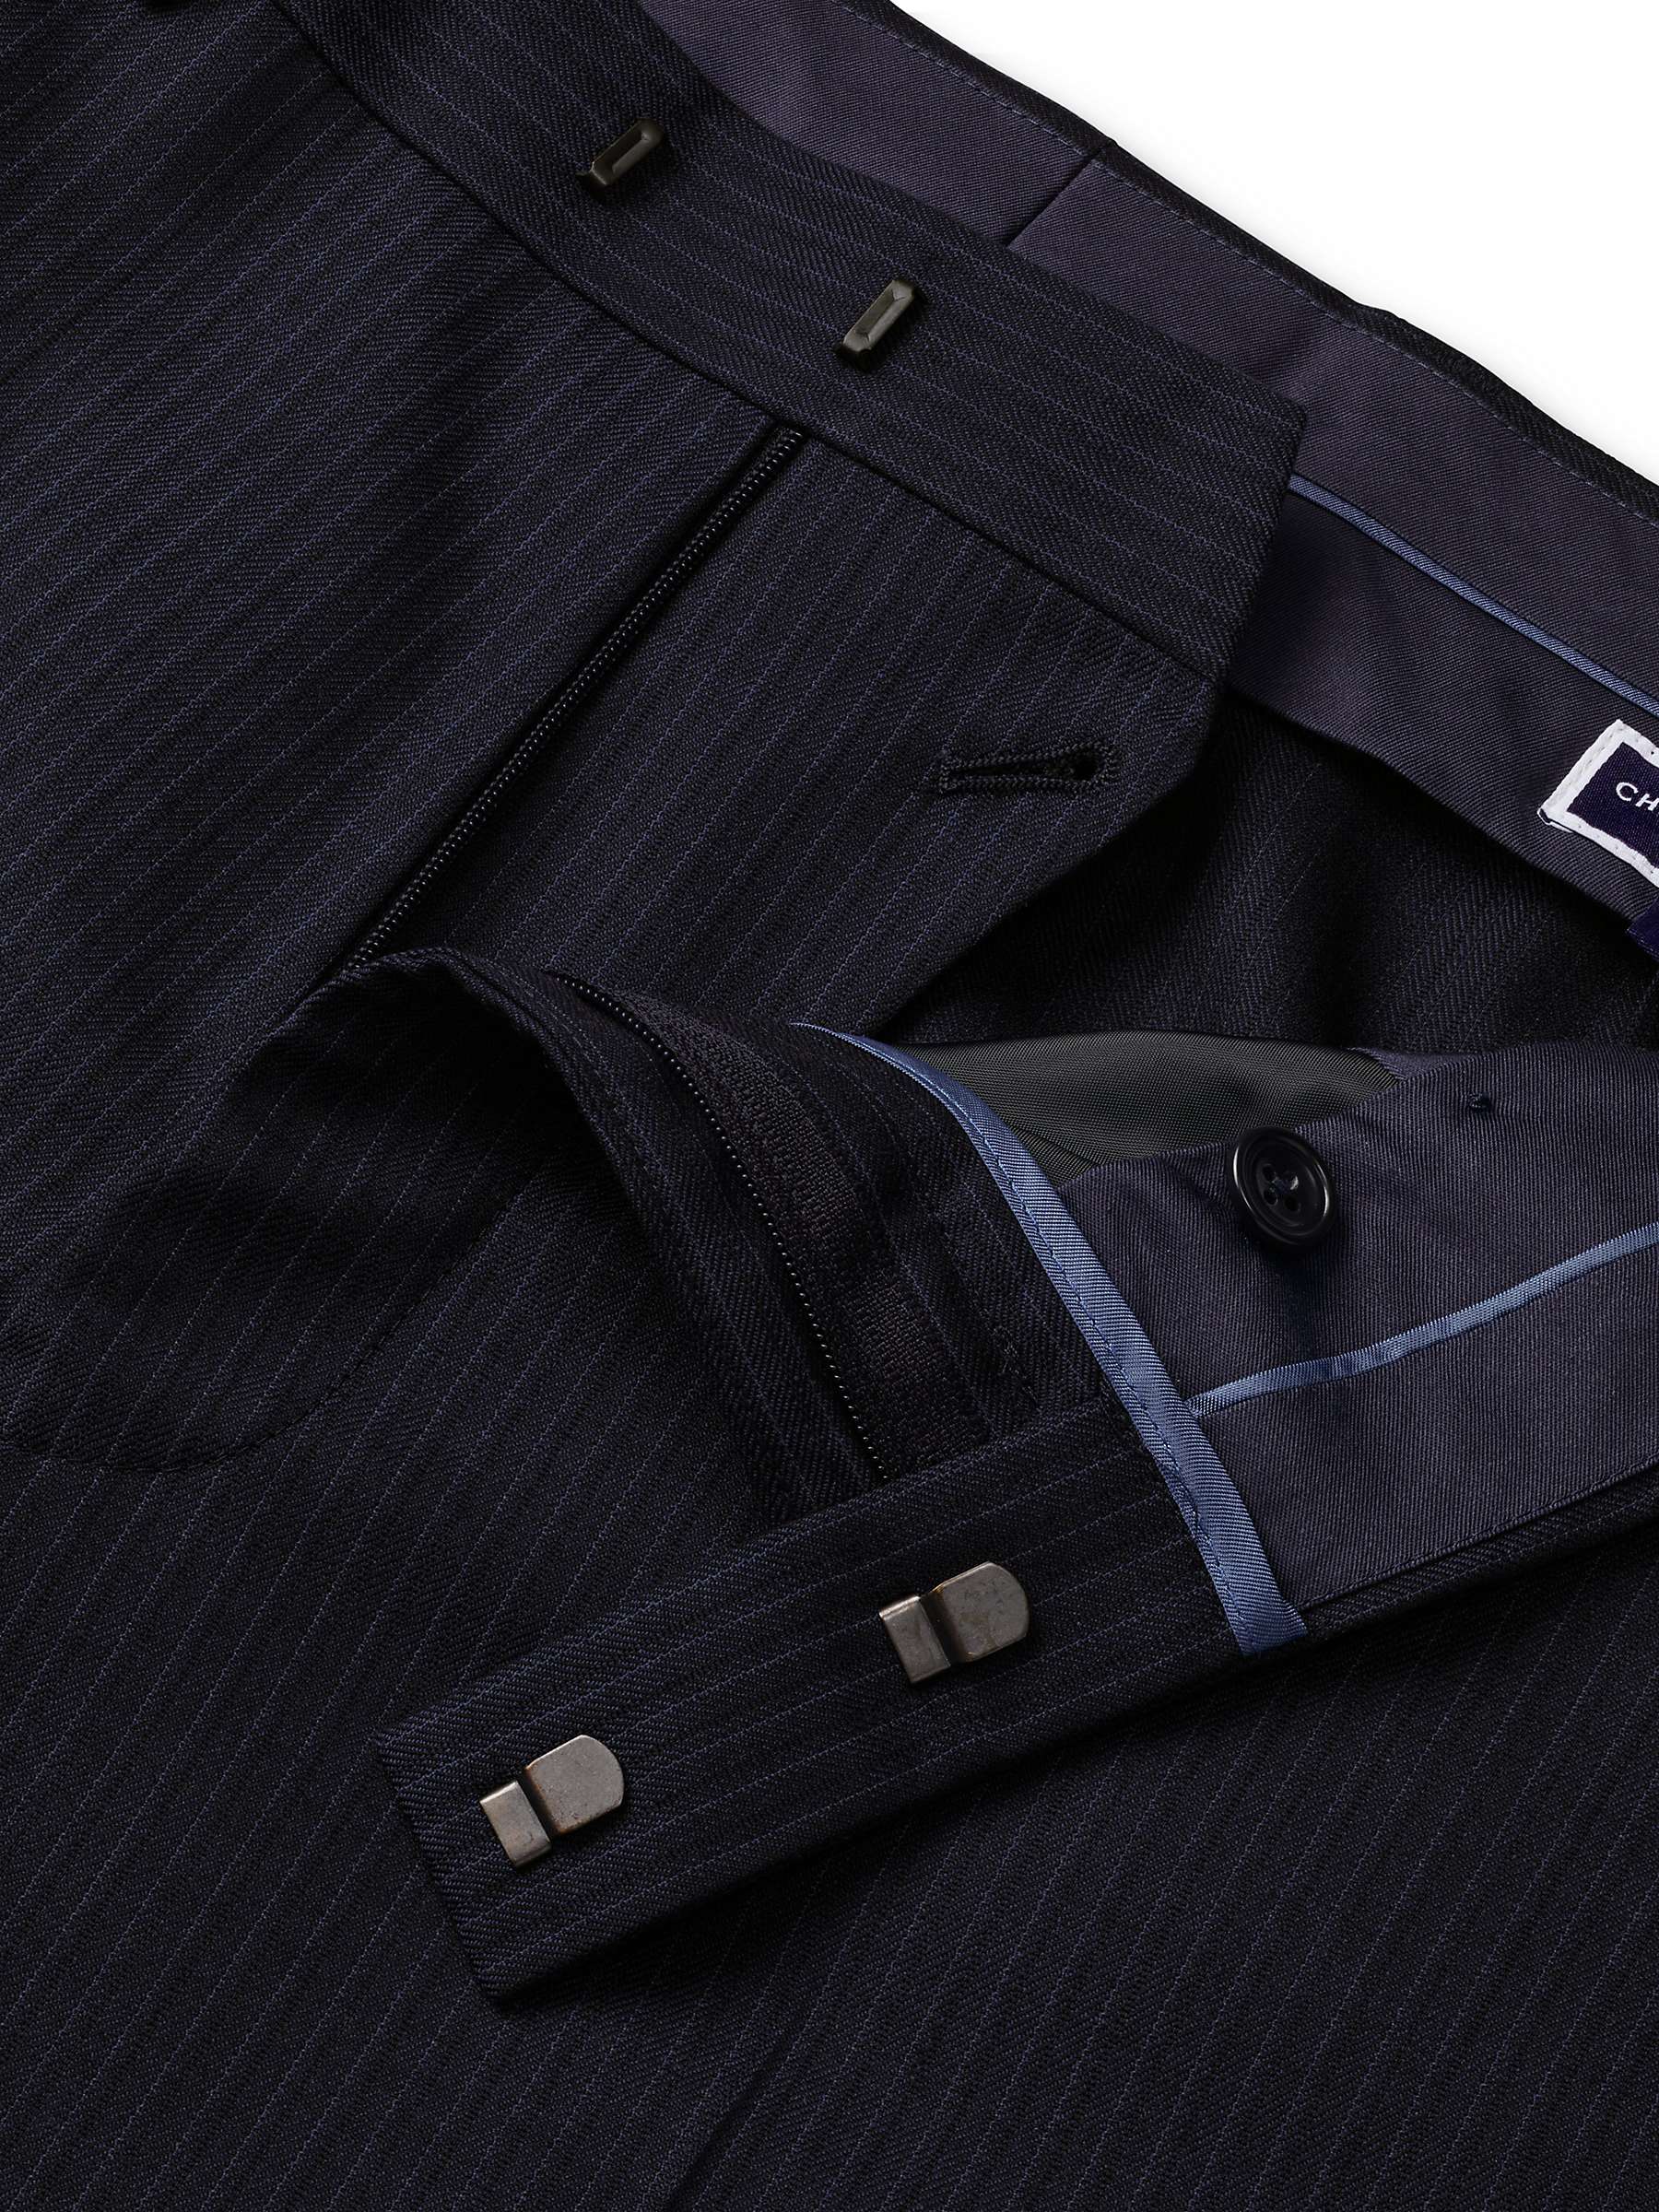 Buy Charles Tyrwhitt Stripe Slim Fit Suit Trousers, Navy Online at johnlewis.com